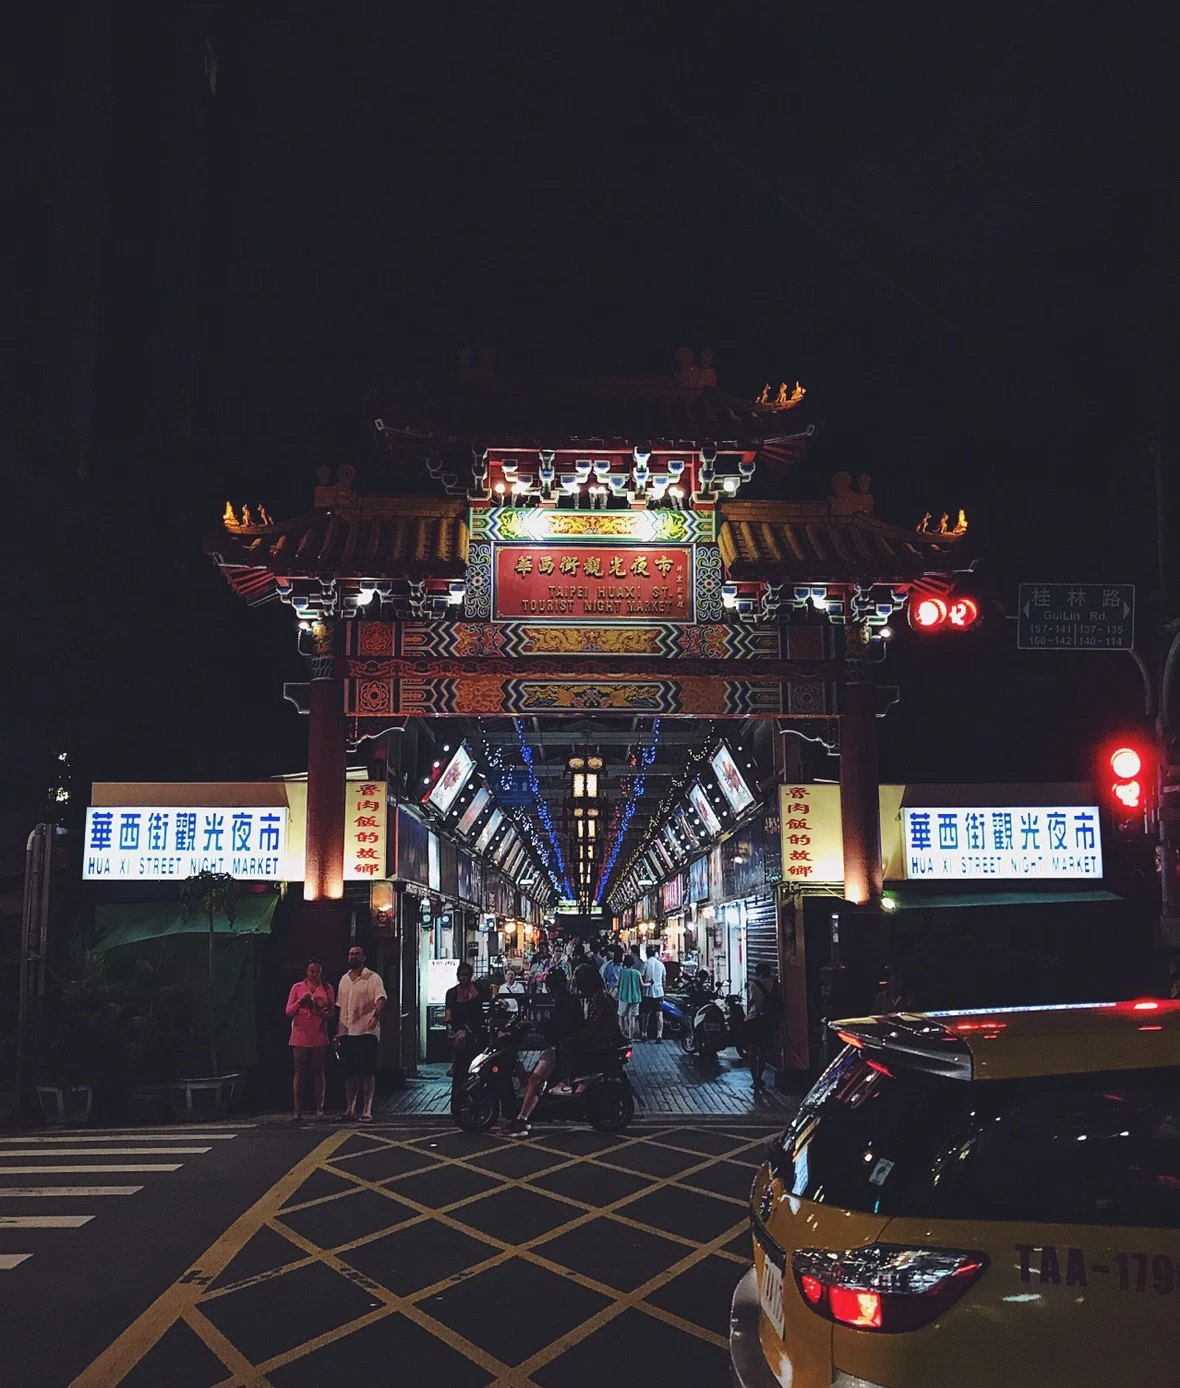 Huaxi Street Night Market